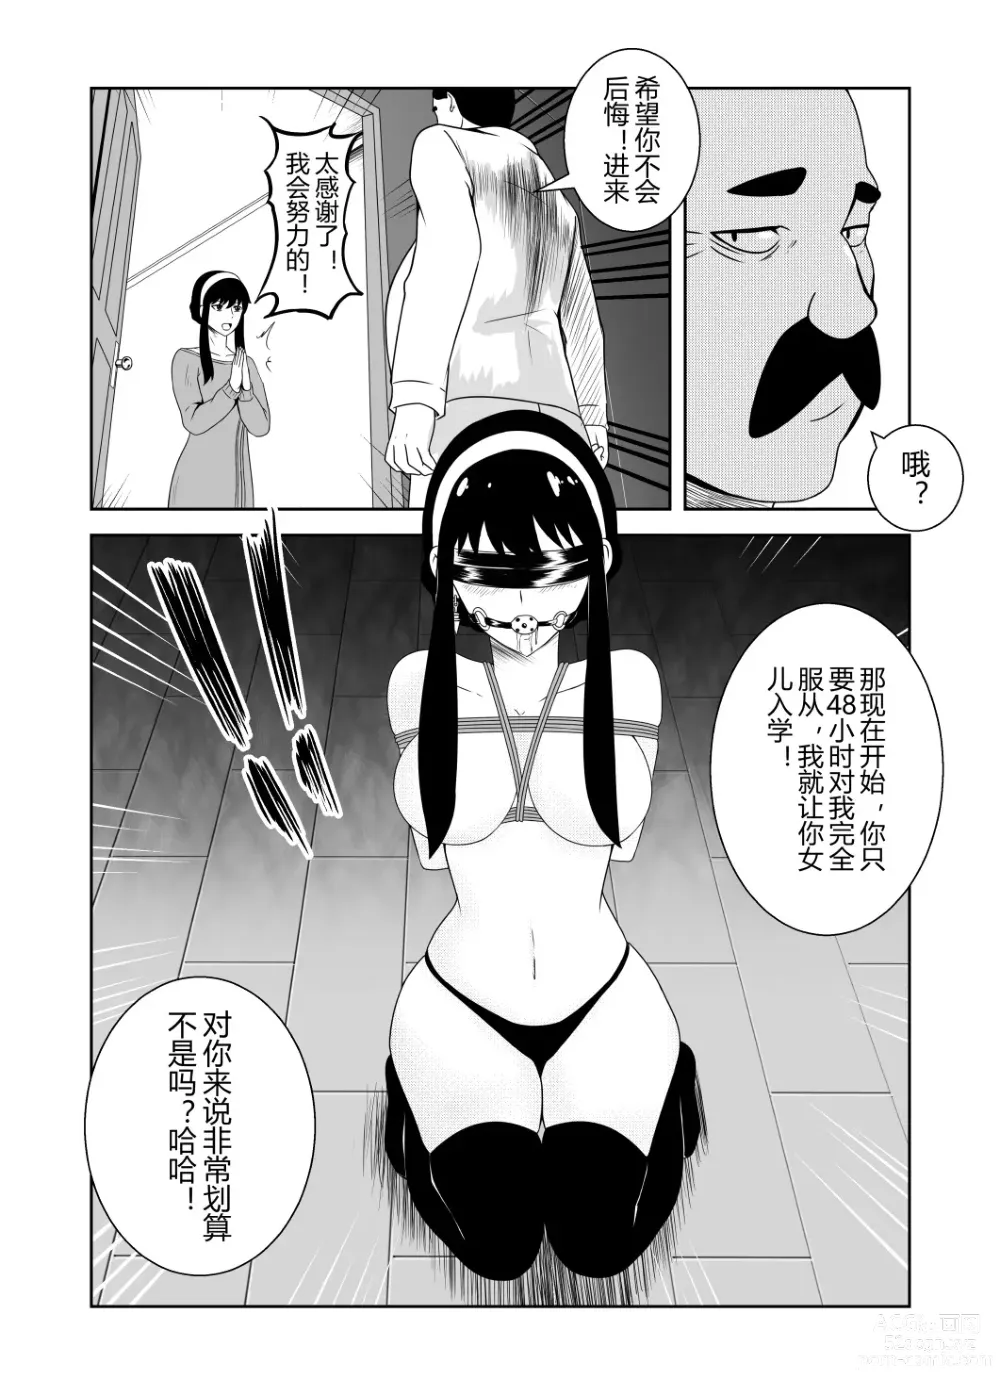 Page 6 of doujinshi 间谍过家家